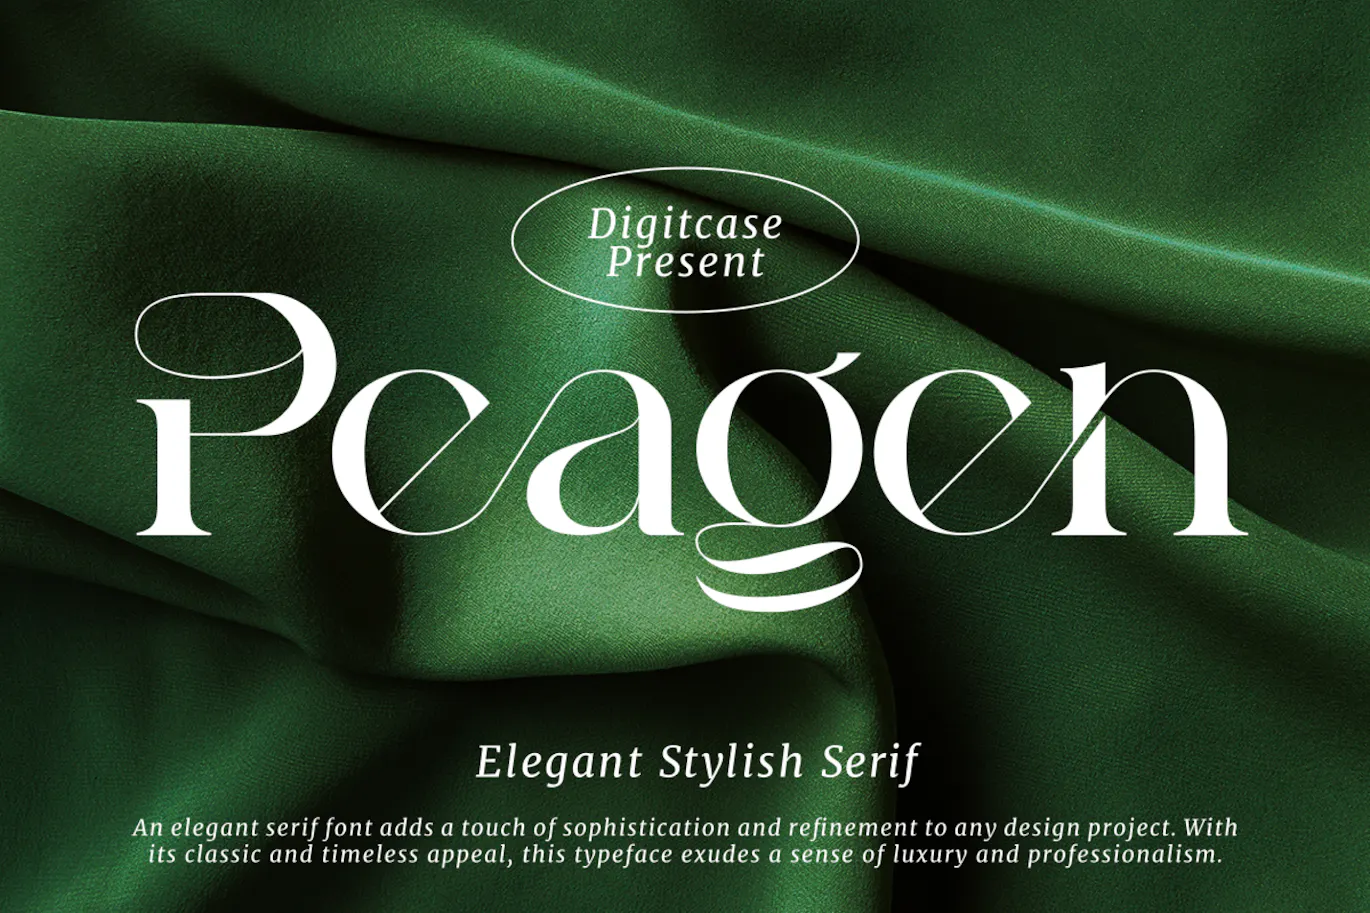 优雅时尚衬线字体 Peagen Elegant Stylish Serif 设计字体 第1张